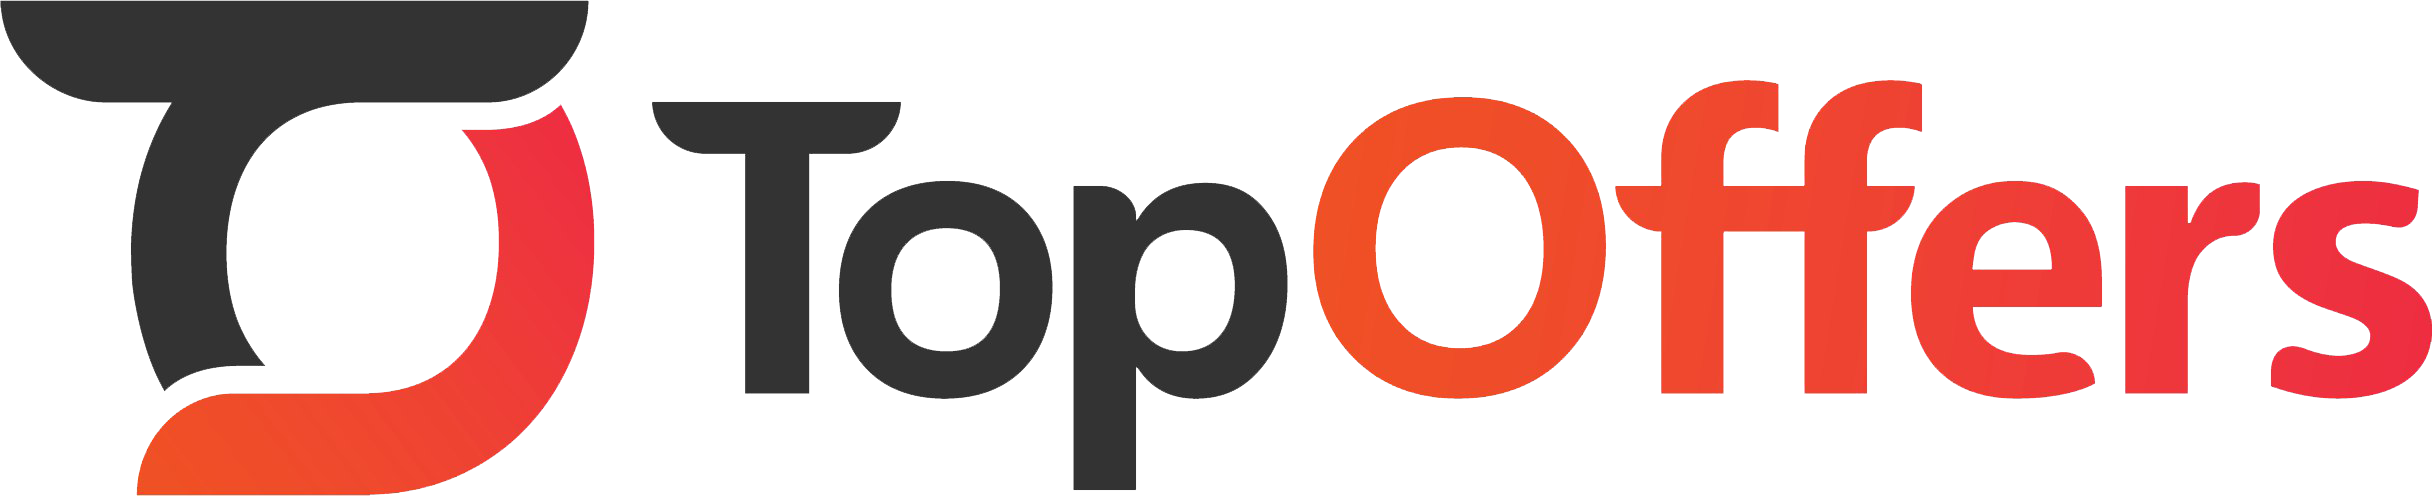 TopOffers logo image